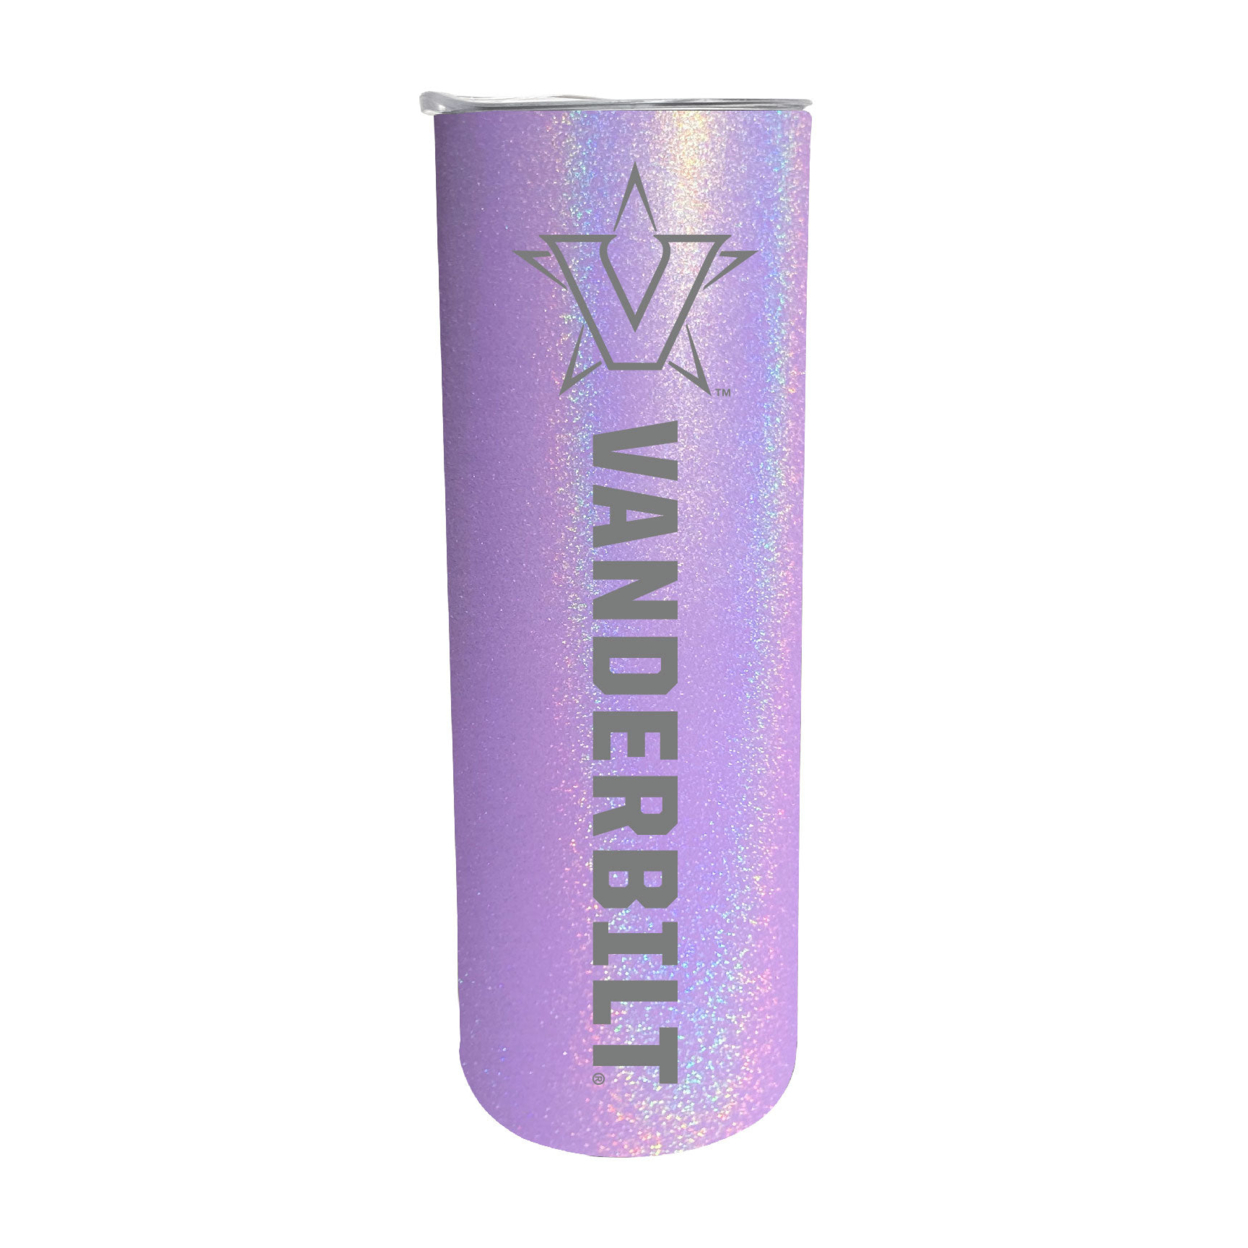 Vanderbilt University 20oz Insulated Stainless Steel Skinny Tumbler - Rainbow Glitter Purple